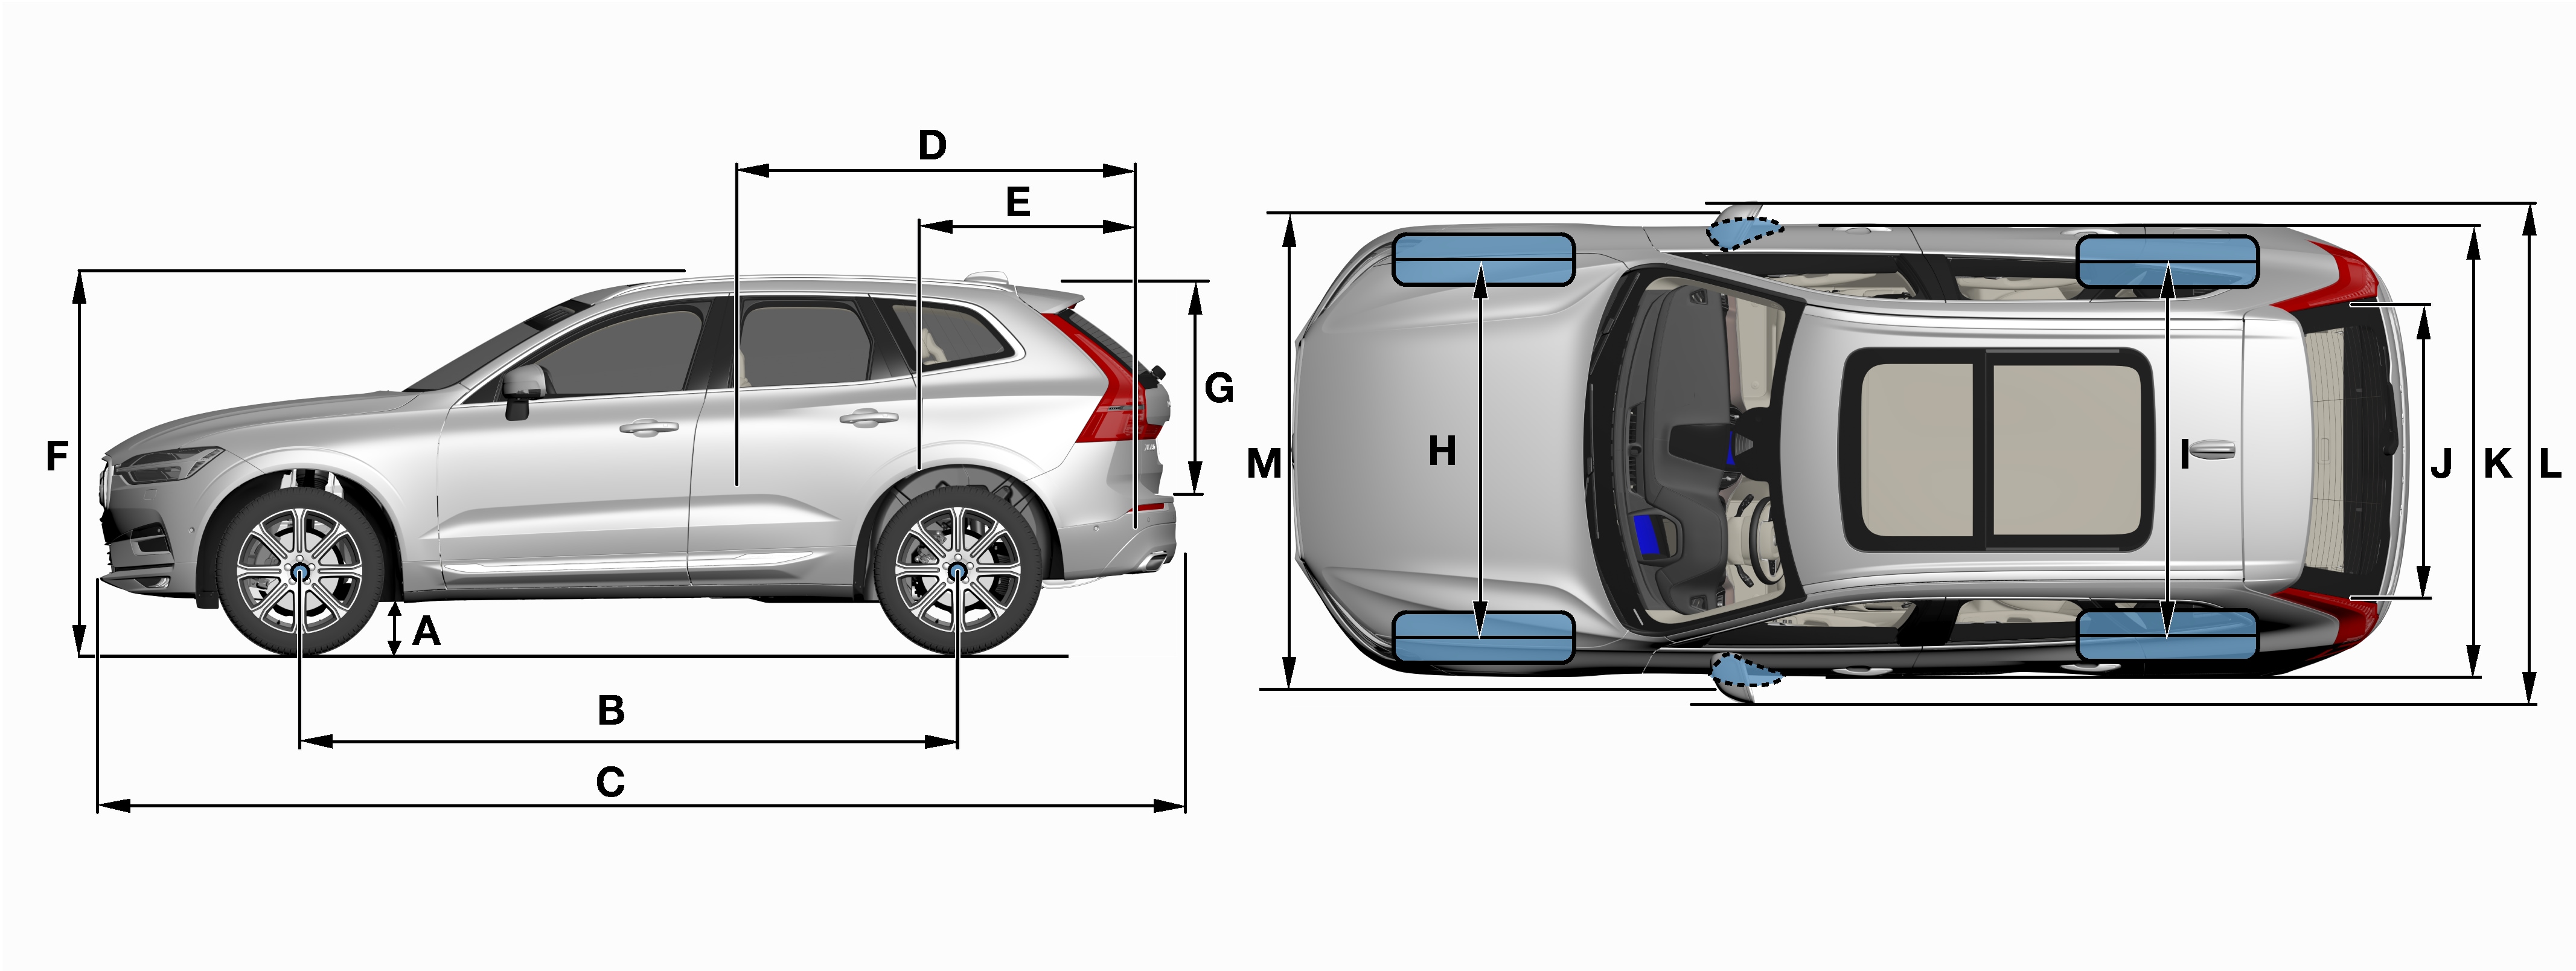 2019 Volvo Xc60 Interior Dimensions